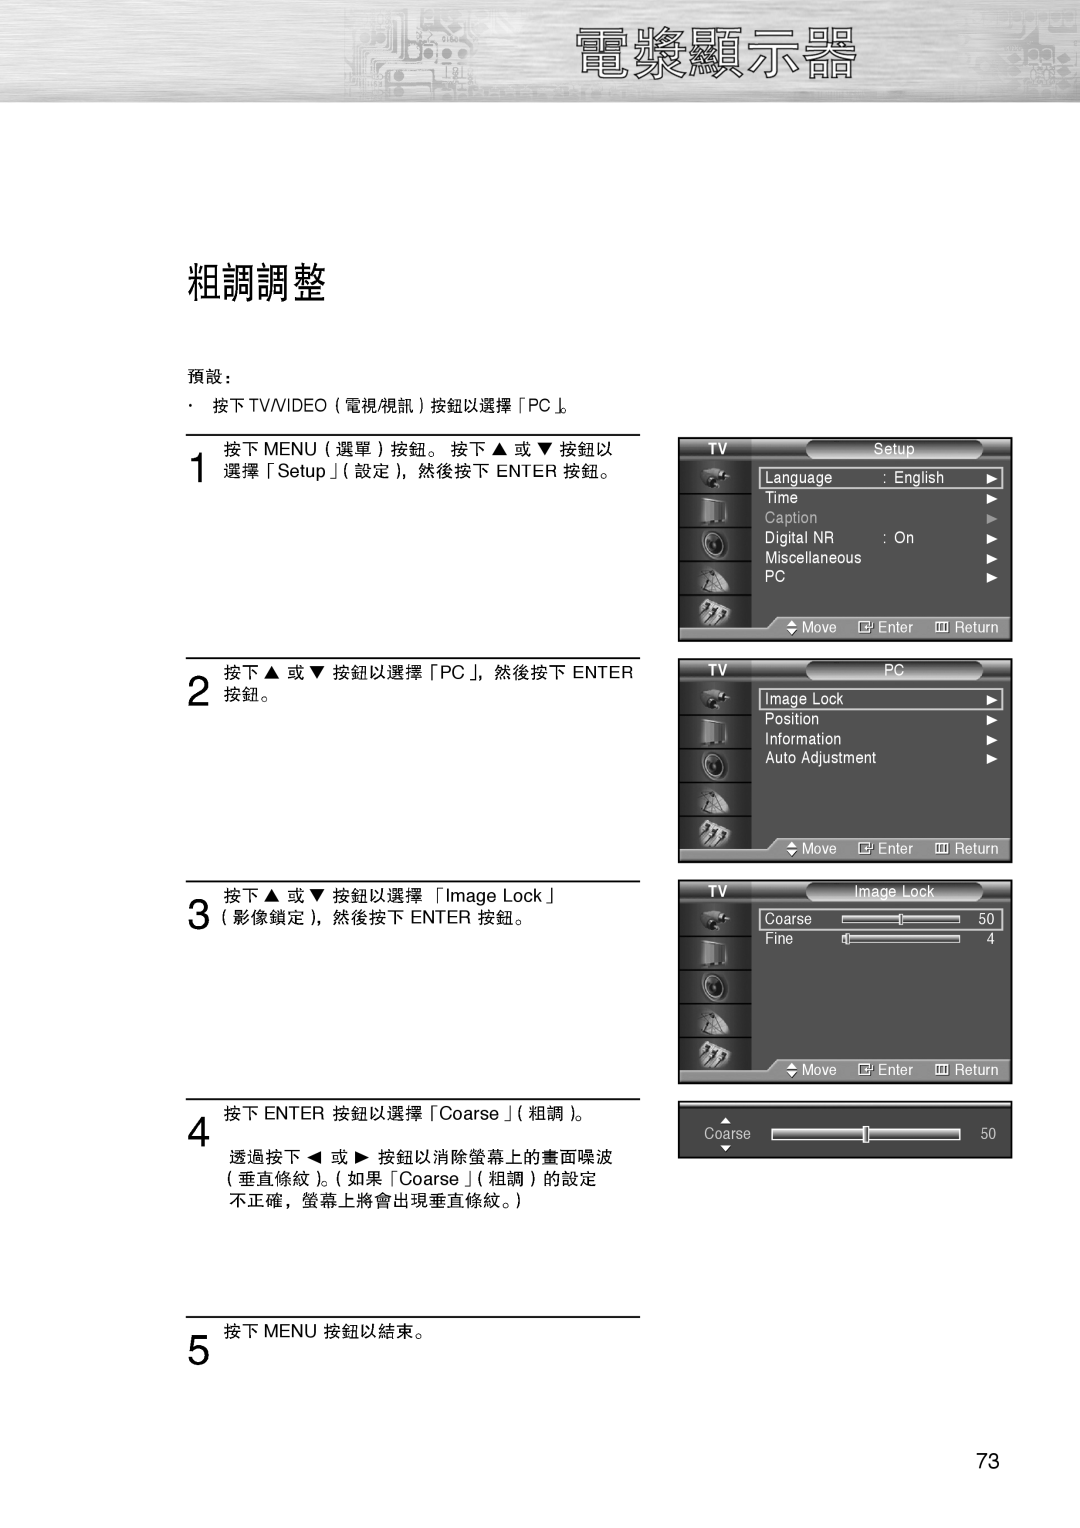 Samsung PL-42D4S manual Caption, Coarse, MENU Setup 